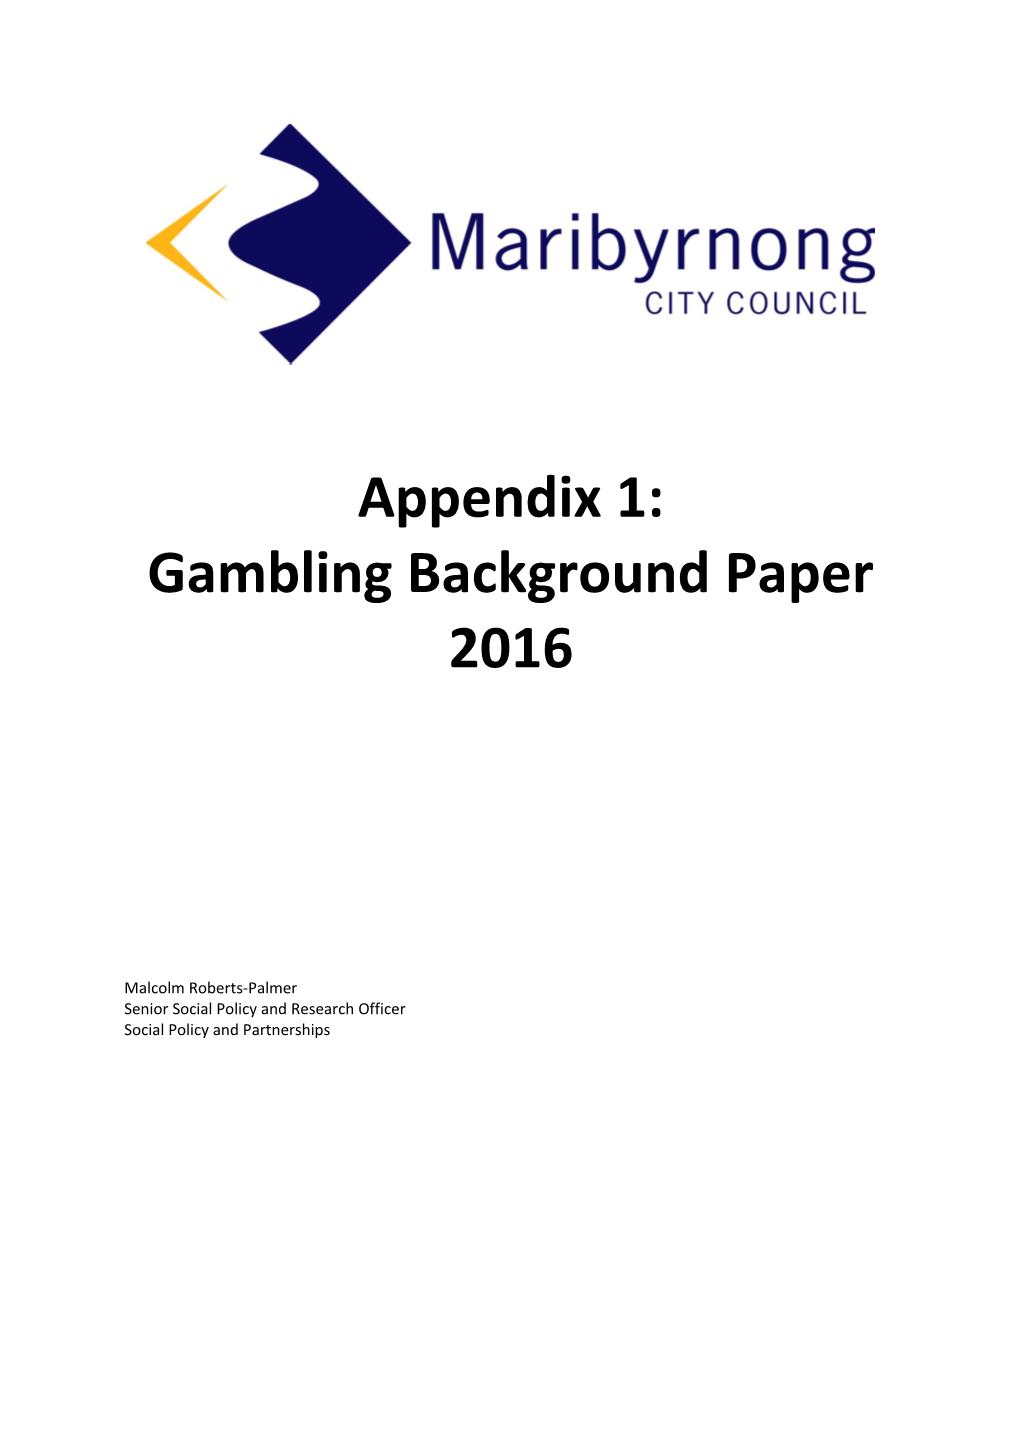 Gambling Background Paper